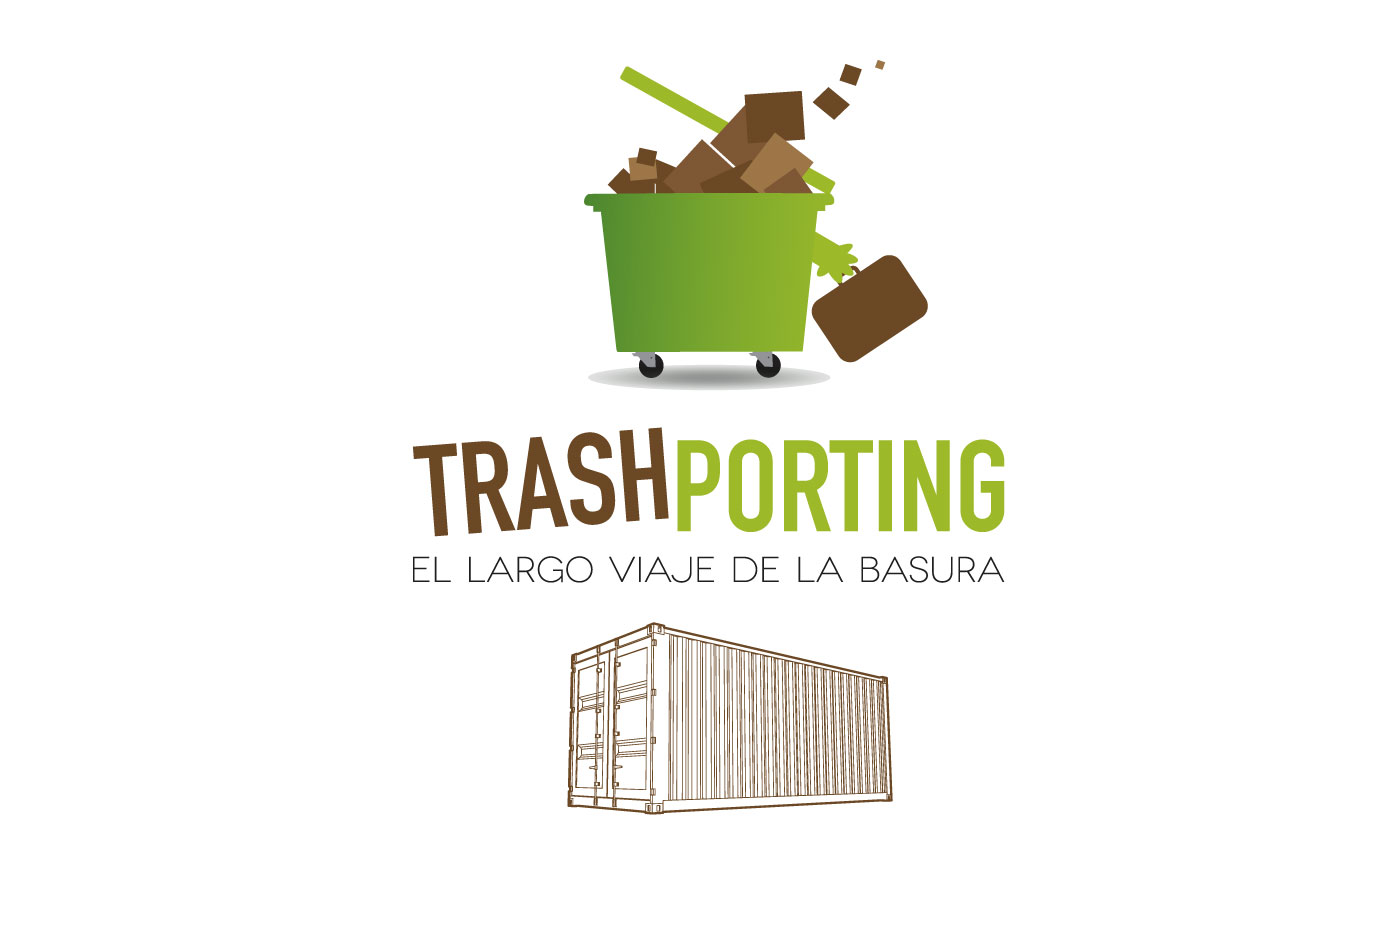 TrashPorting, el largo viaje de la basura